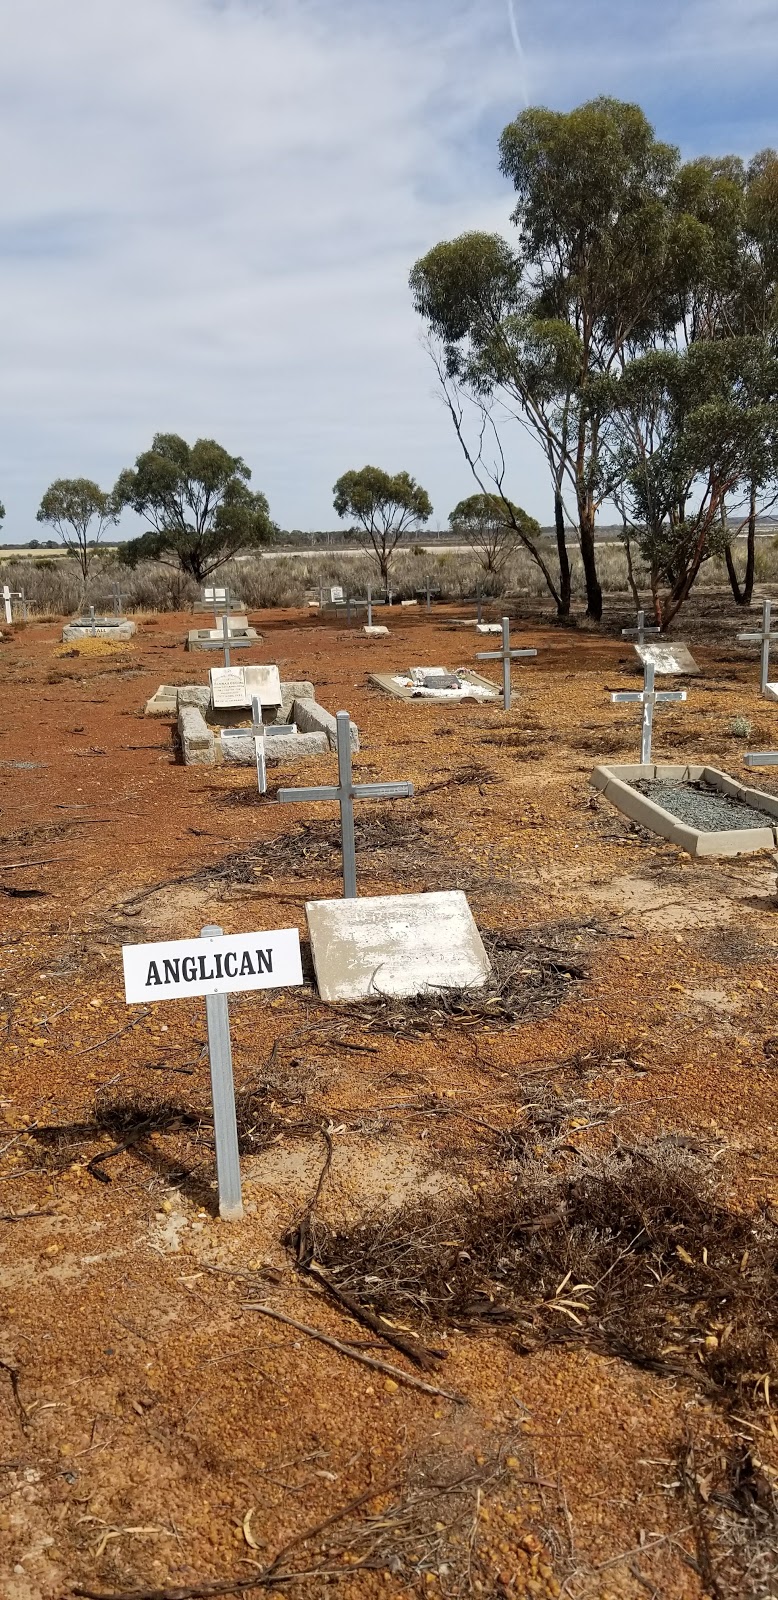 Pioneer Cemetery, Kondinin | Kondinin Lake Rd, Kondinin WA 6367, Australia